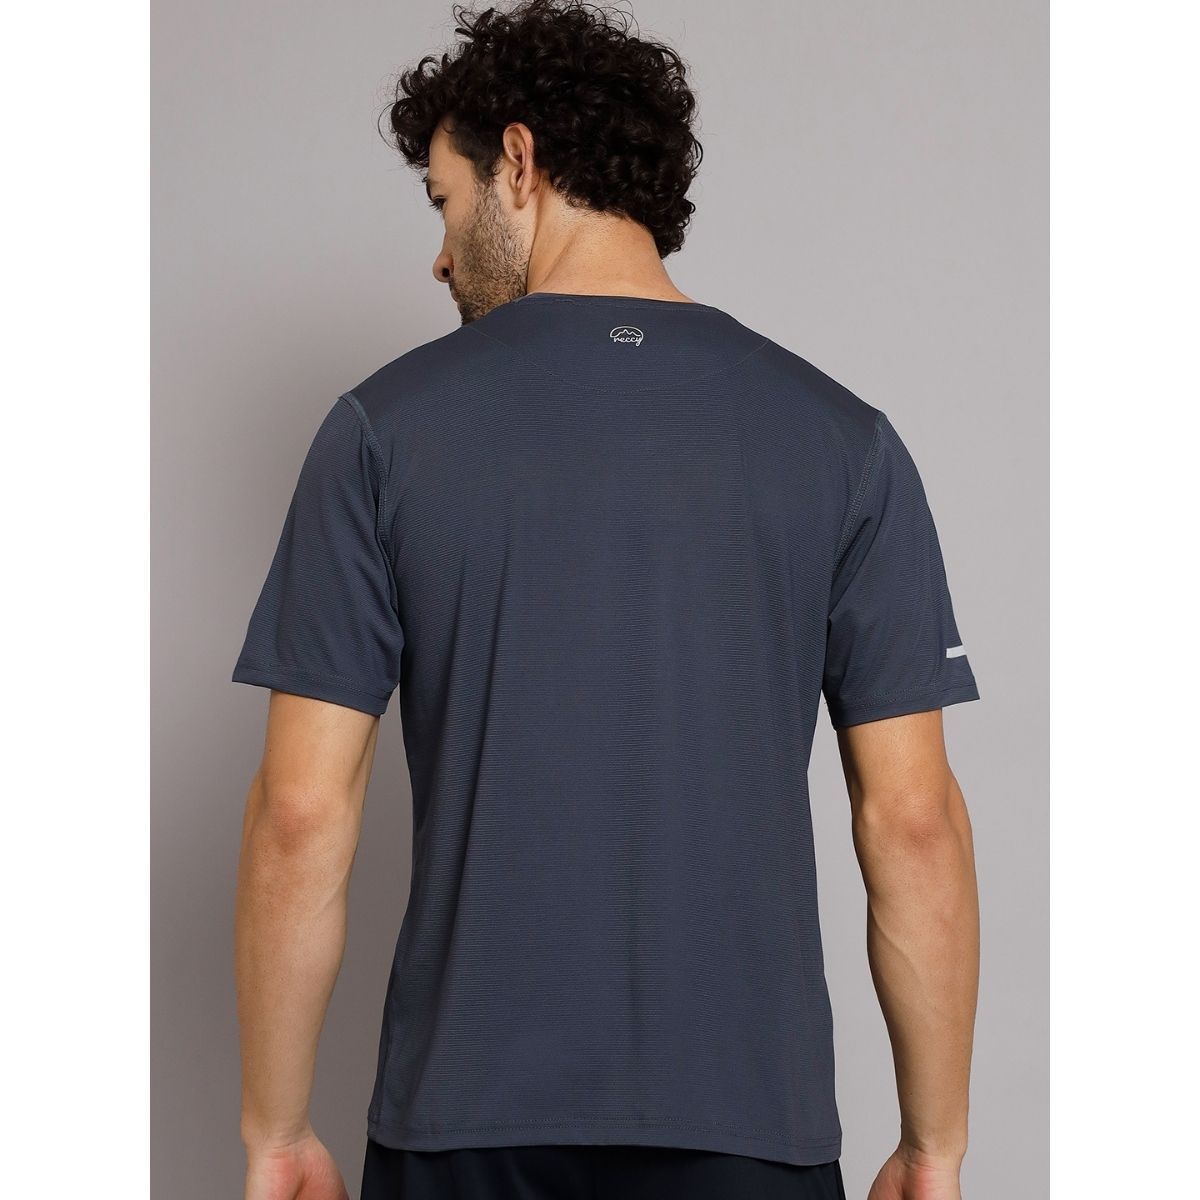 Men's Ultralight Athletic Half Sleeves T-Shirt - Metallic Gray 3